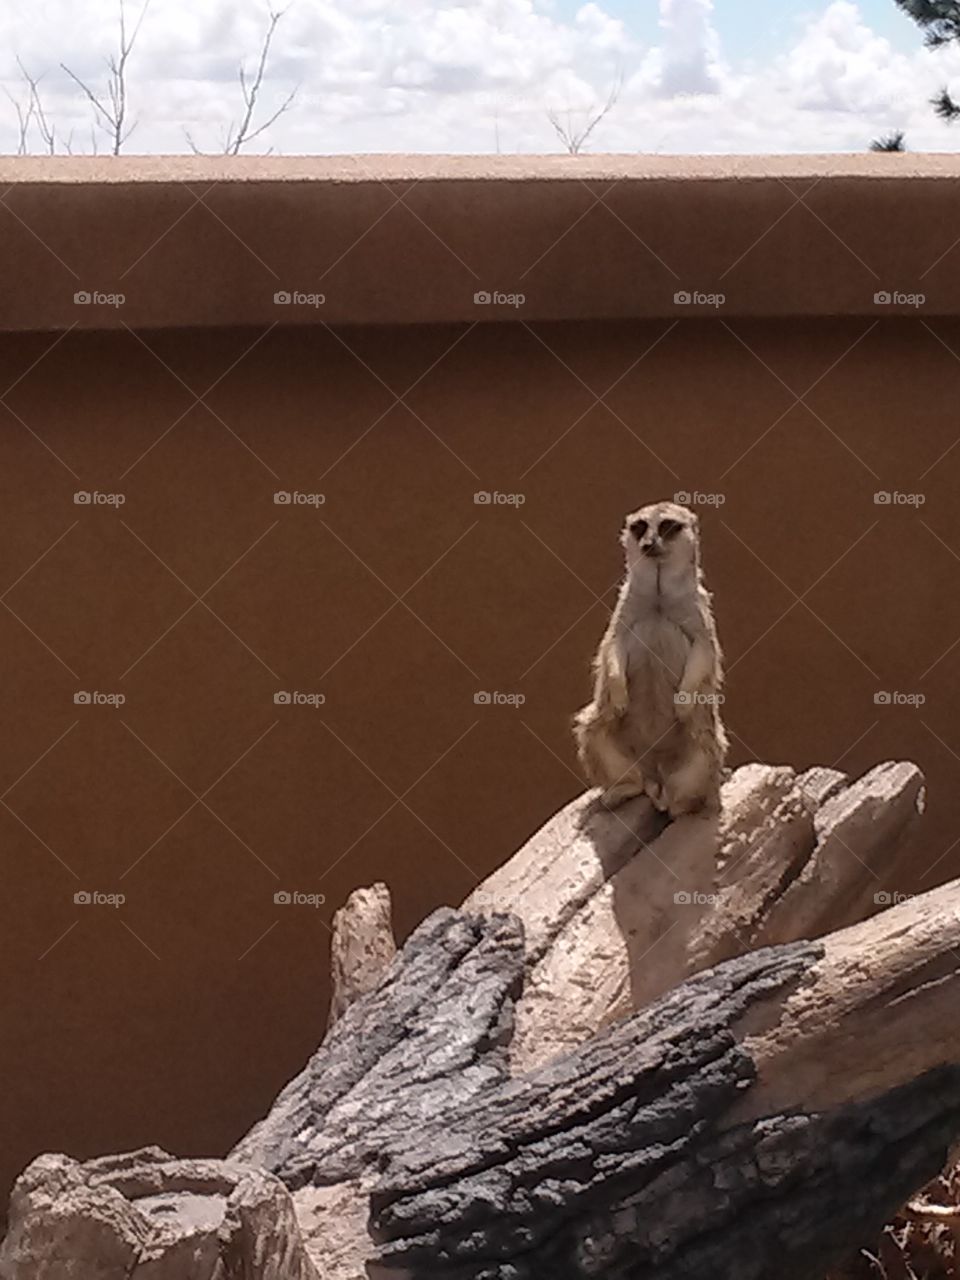 Cheyenne Mountain Zoo Meerkat